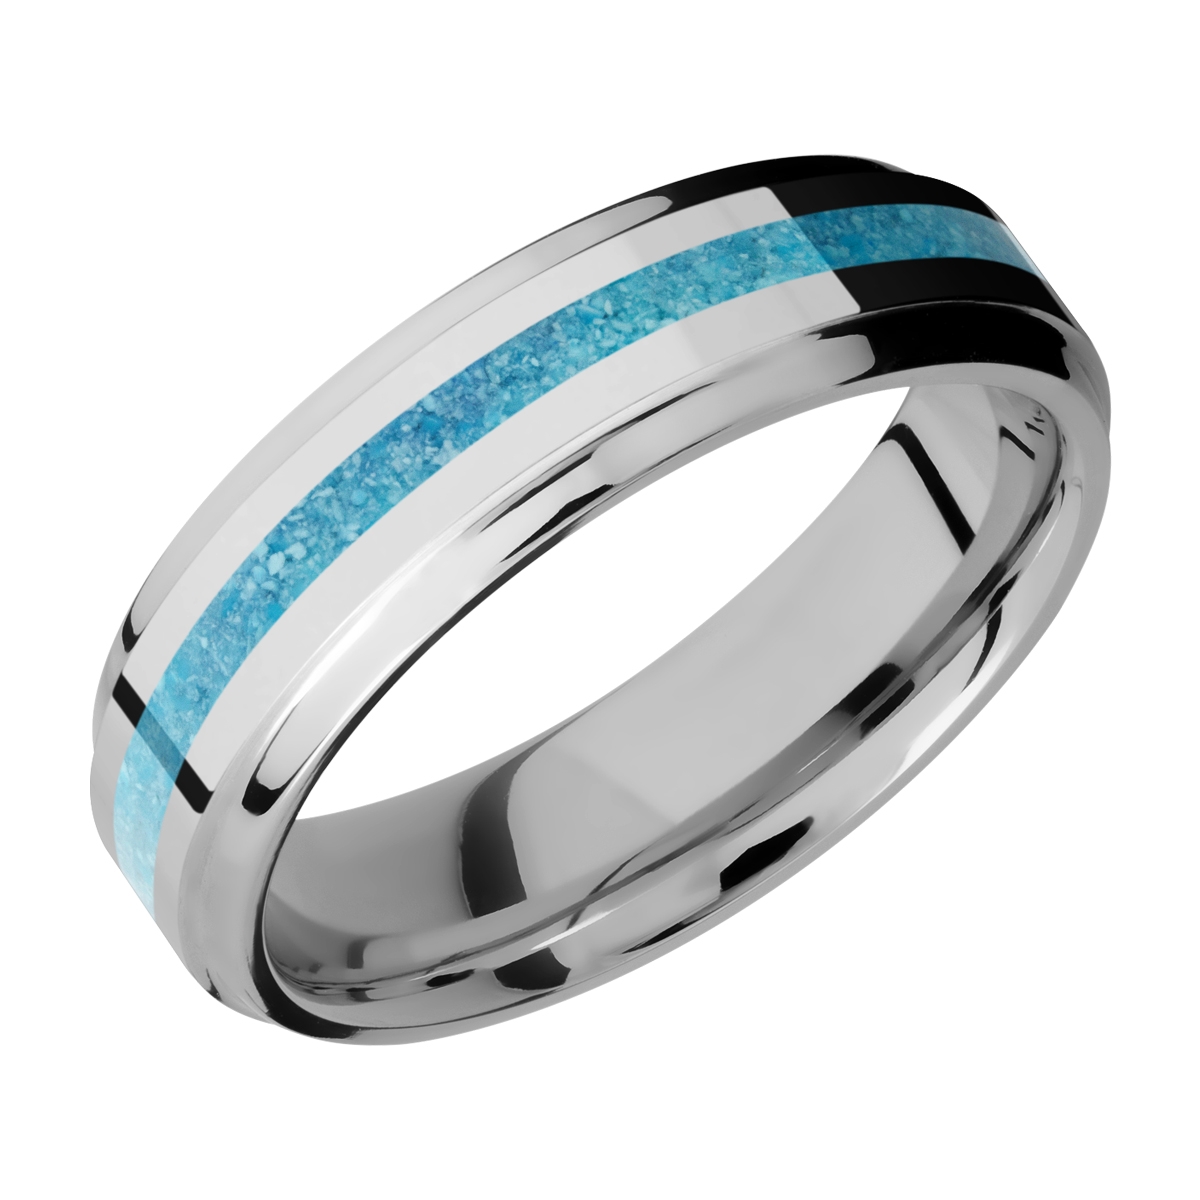 Lashbrook CC6B12(S)/MOSAIC Cobalt Chrome Wedding Ring or Band